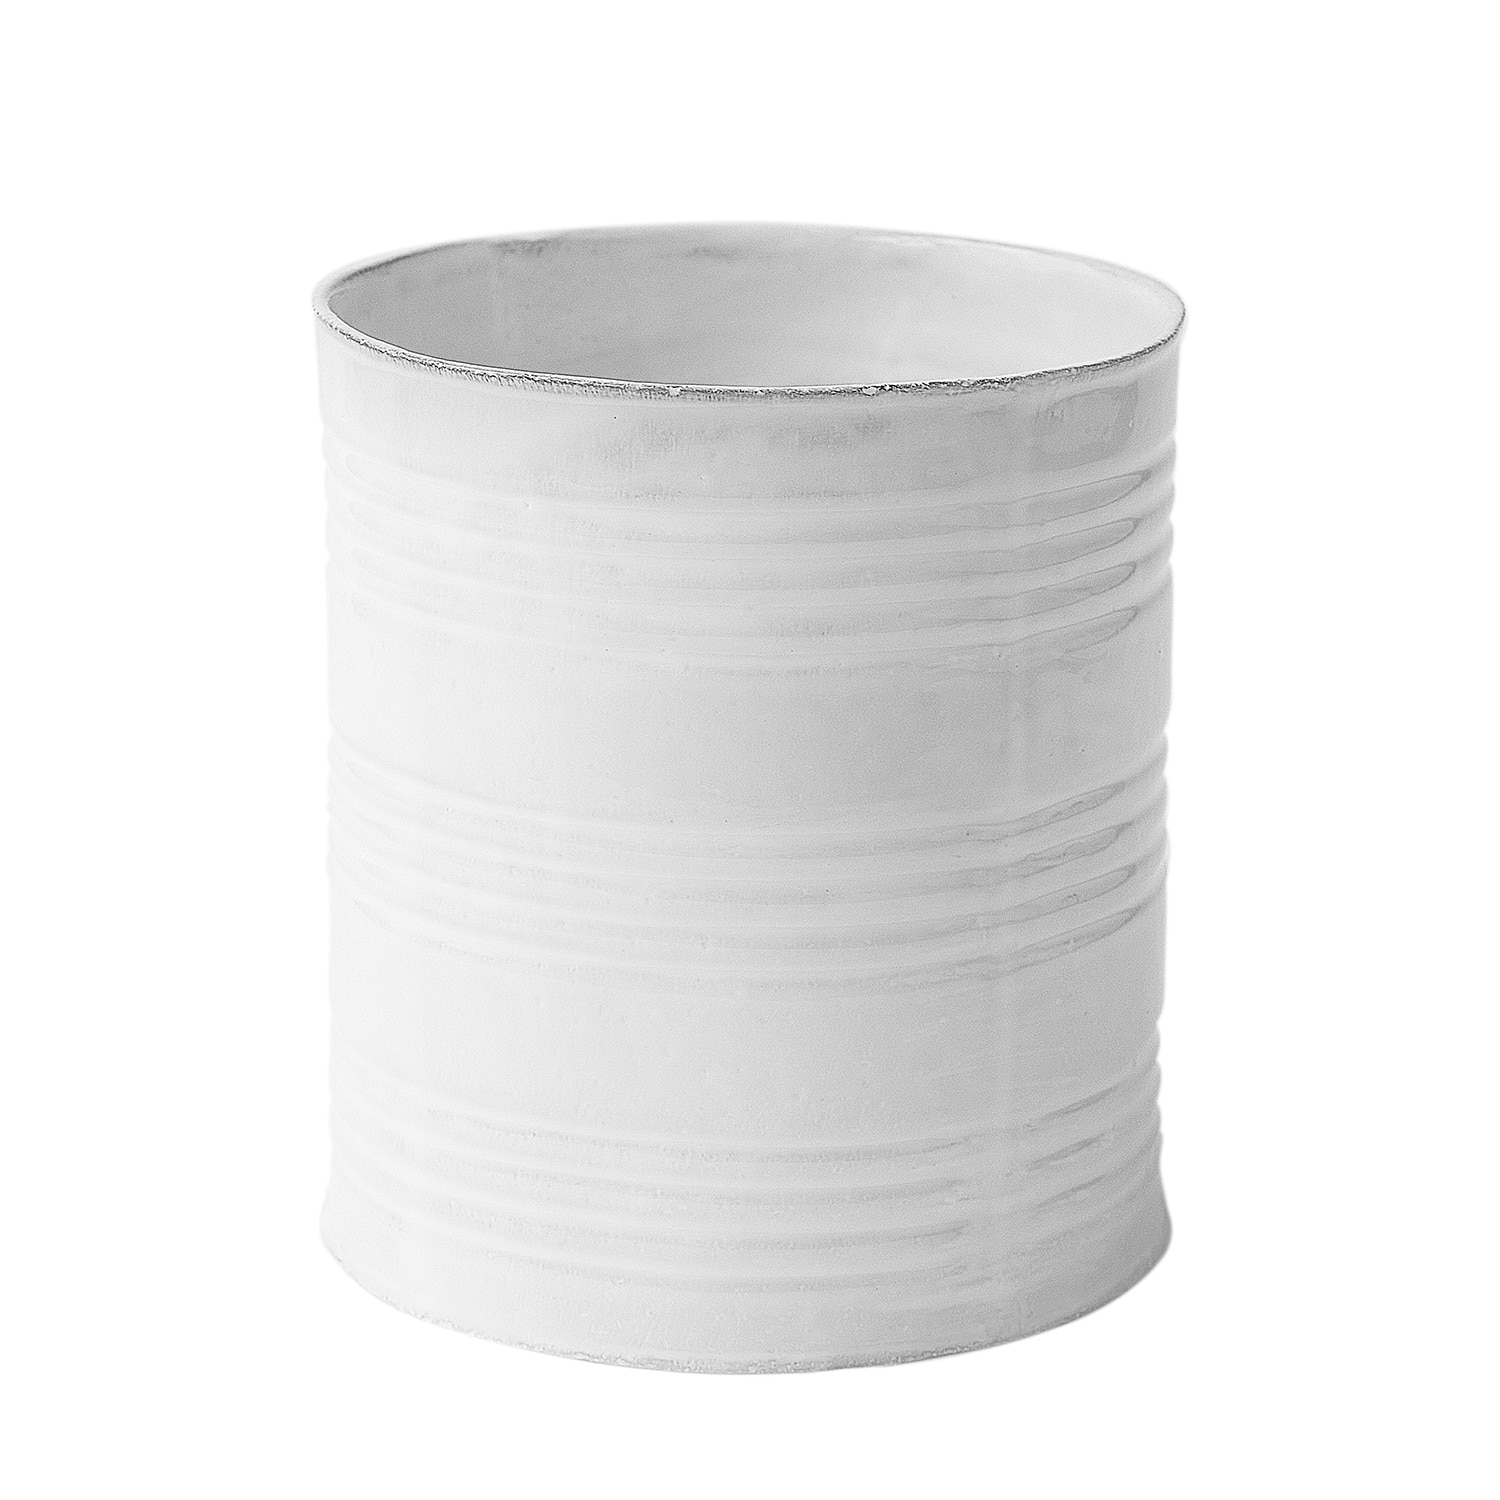 [Conserve] Large Vase